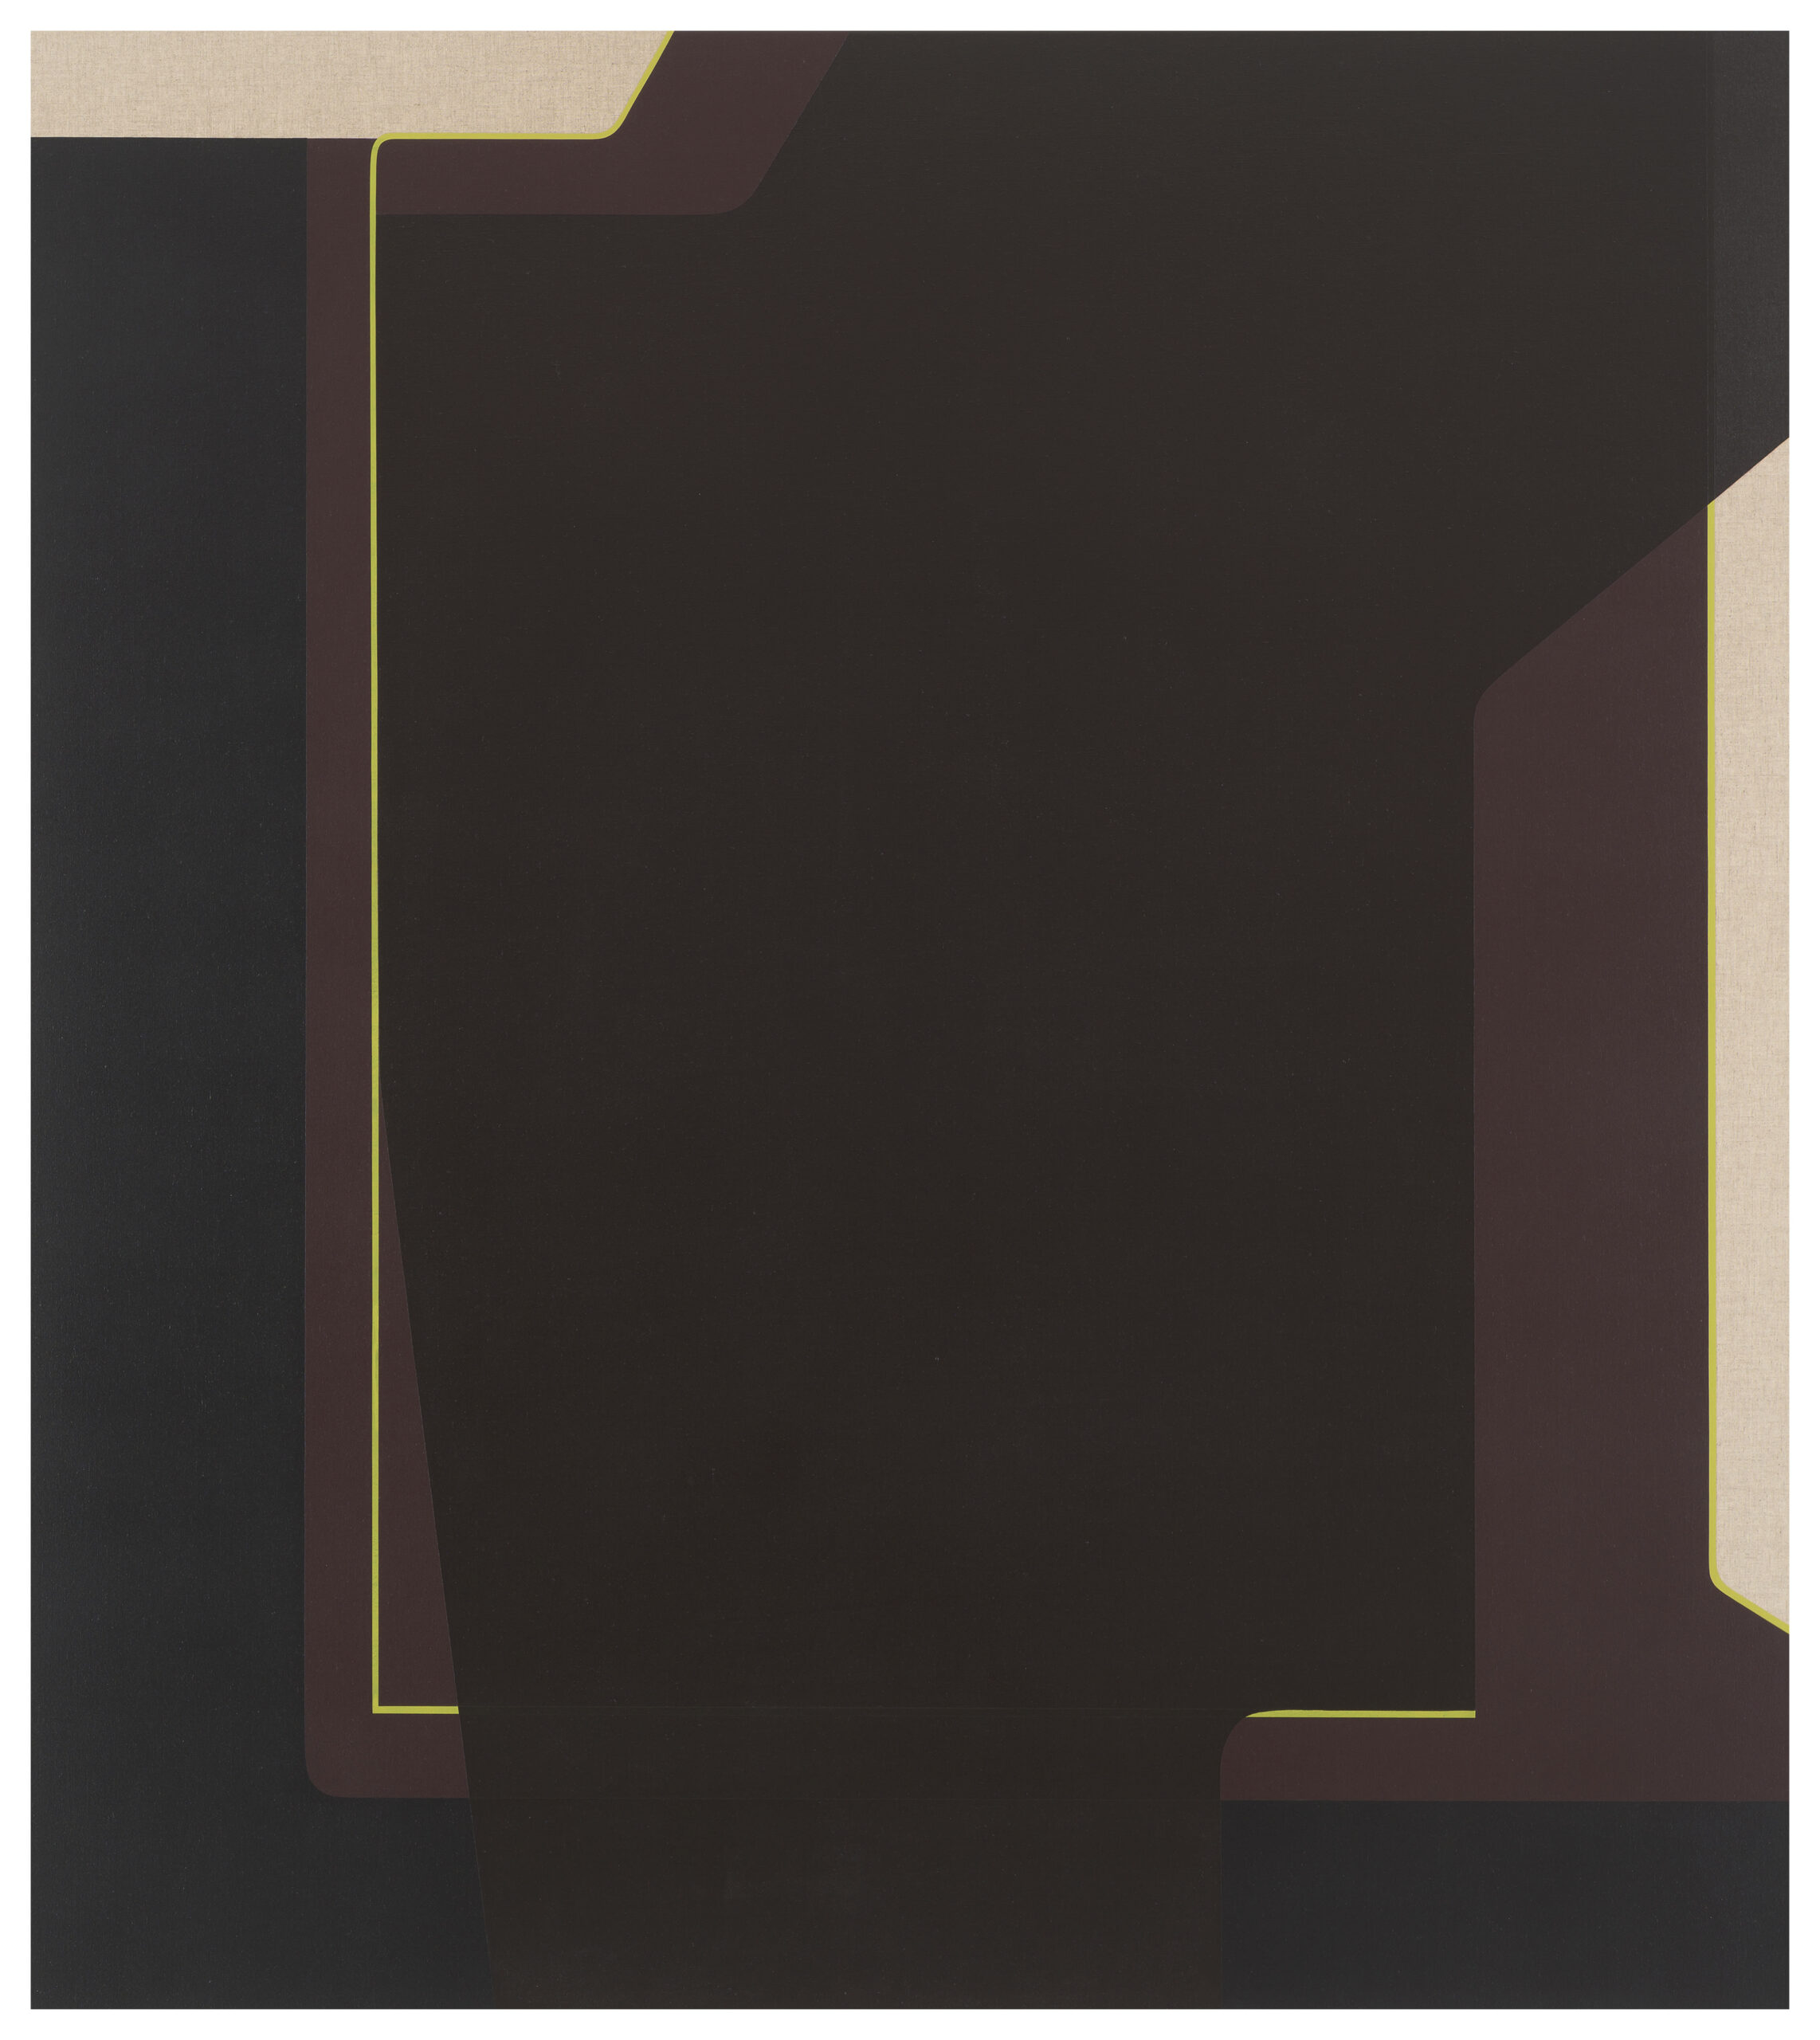 Matthew Browne 'Pouri' vinyl tempera & oil on linen 180 x 160cm $19,000